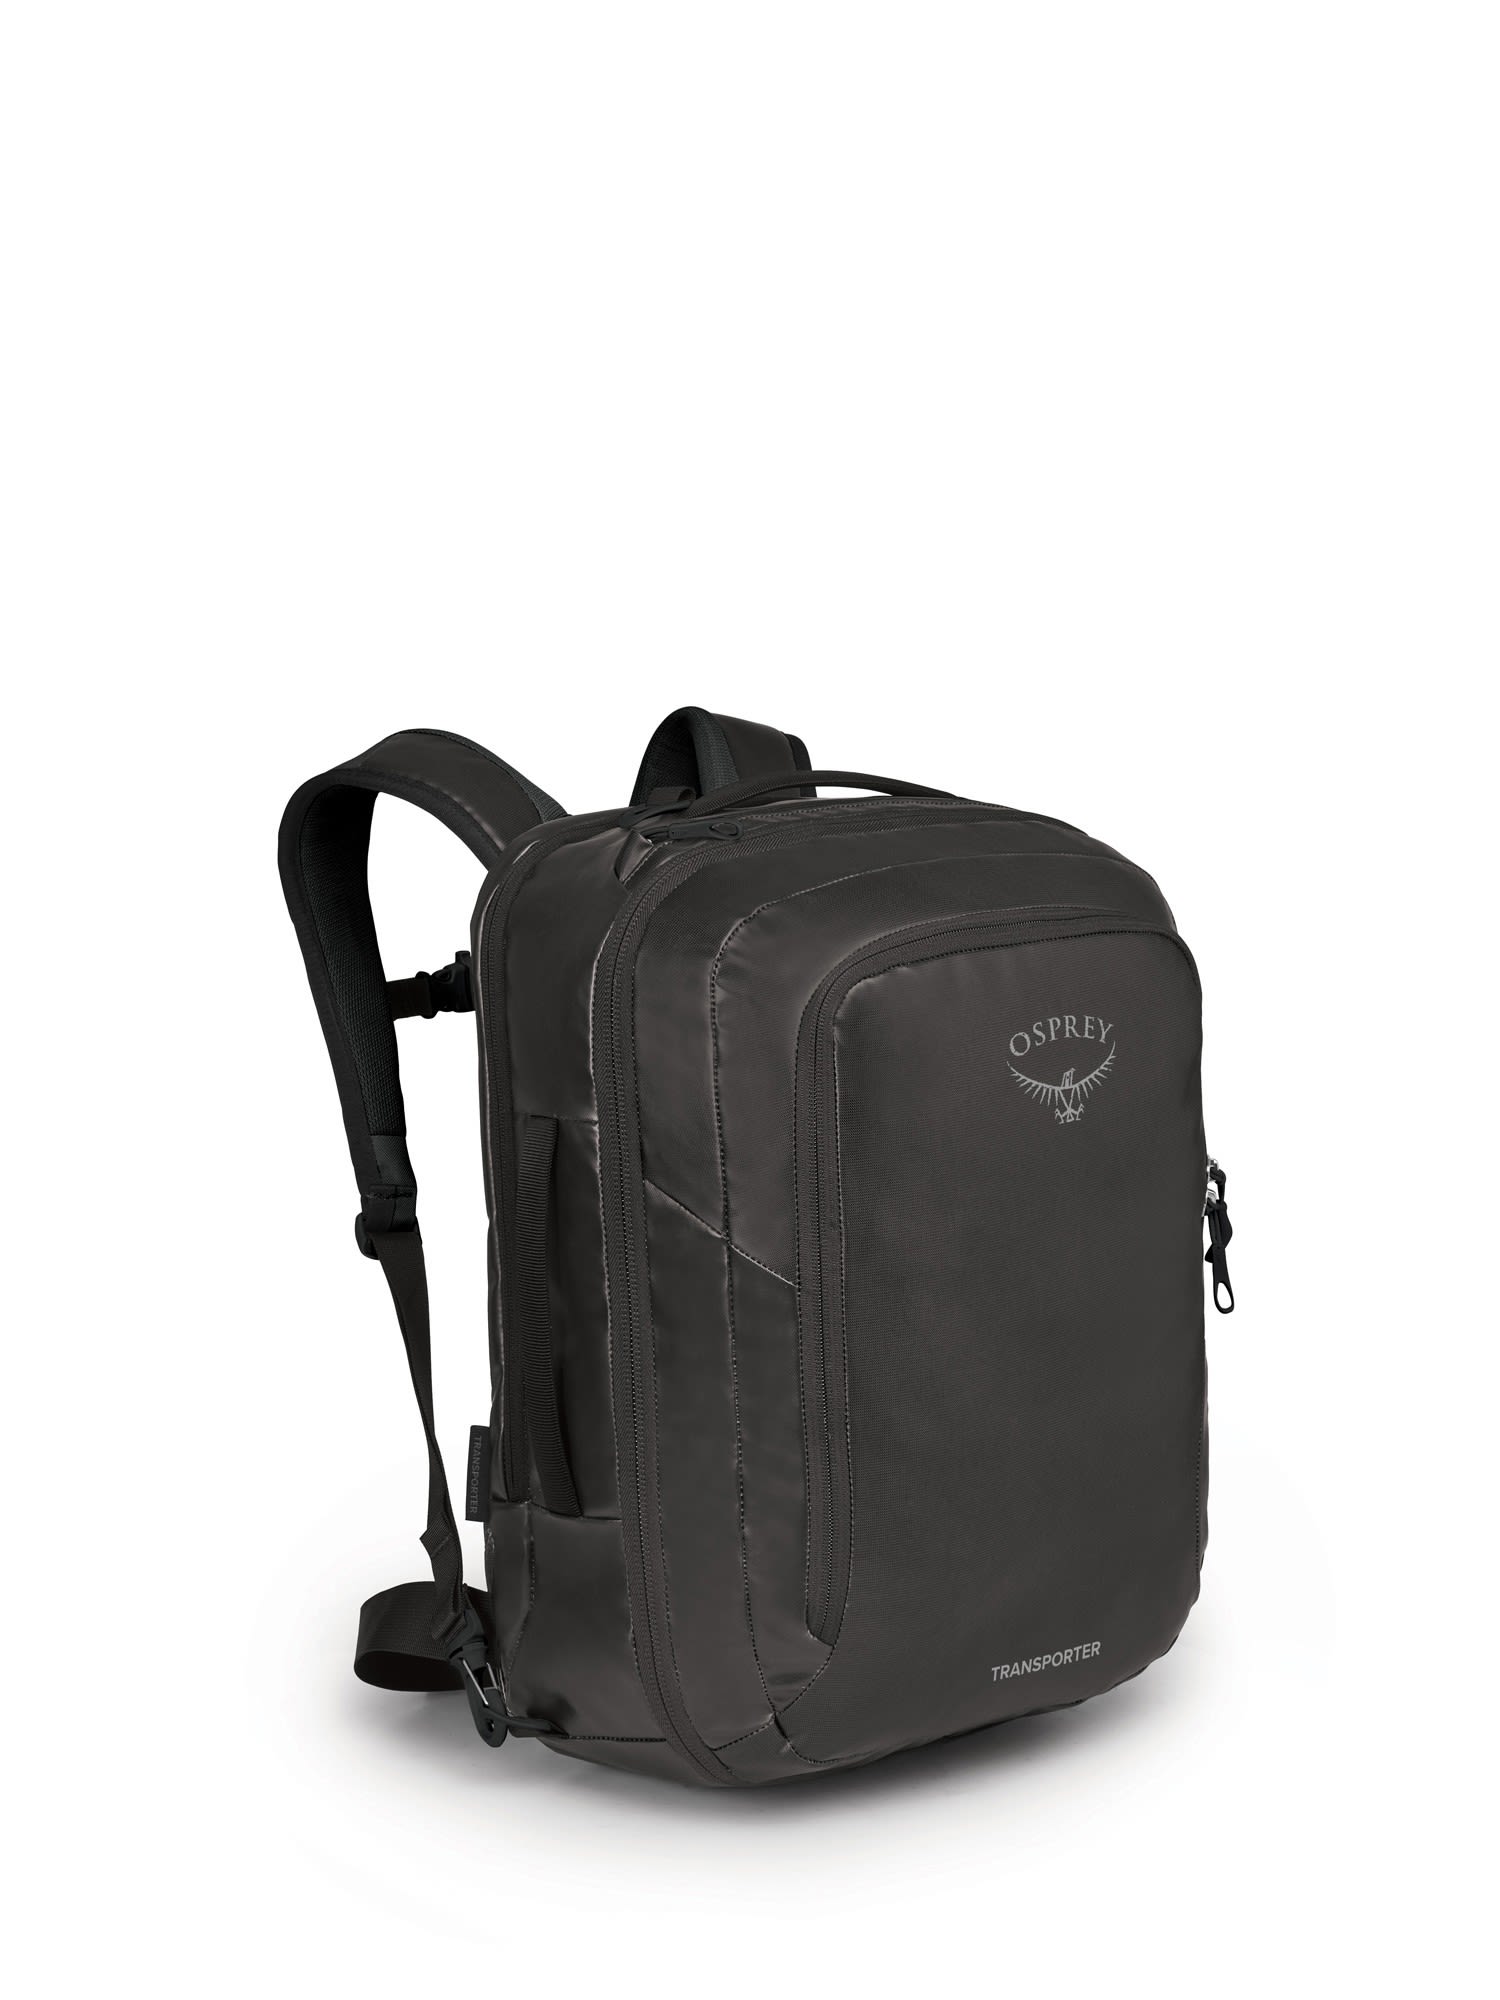 Osprey Transporter Global Carry-ON Bag Schwarz- Reiseruckscke- Grsse 36l - Farbe Black